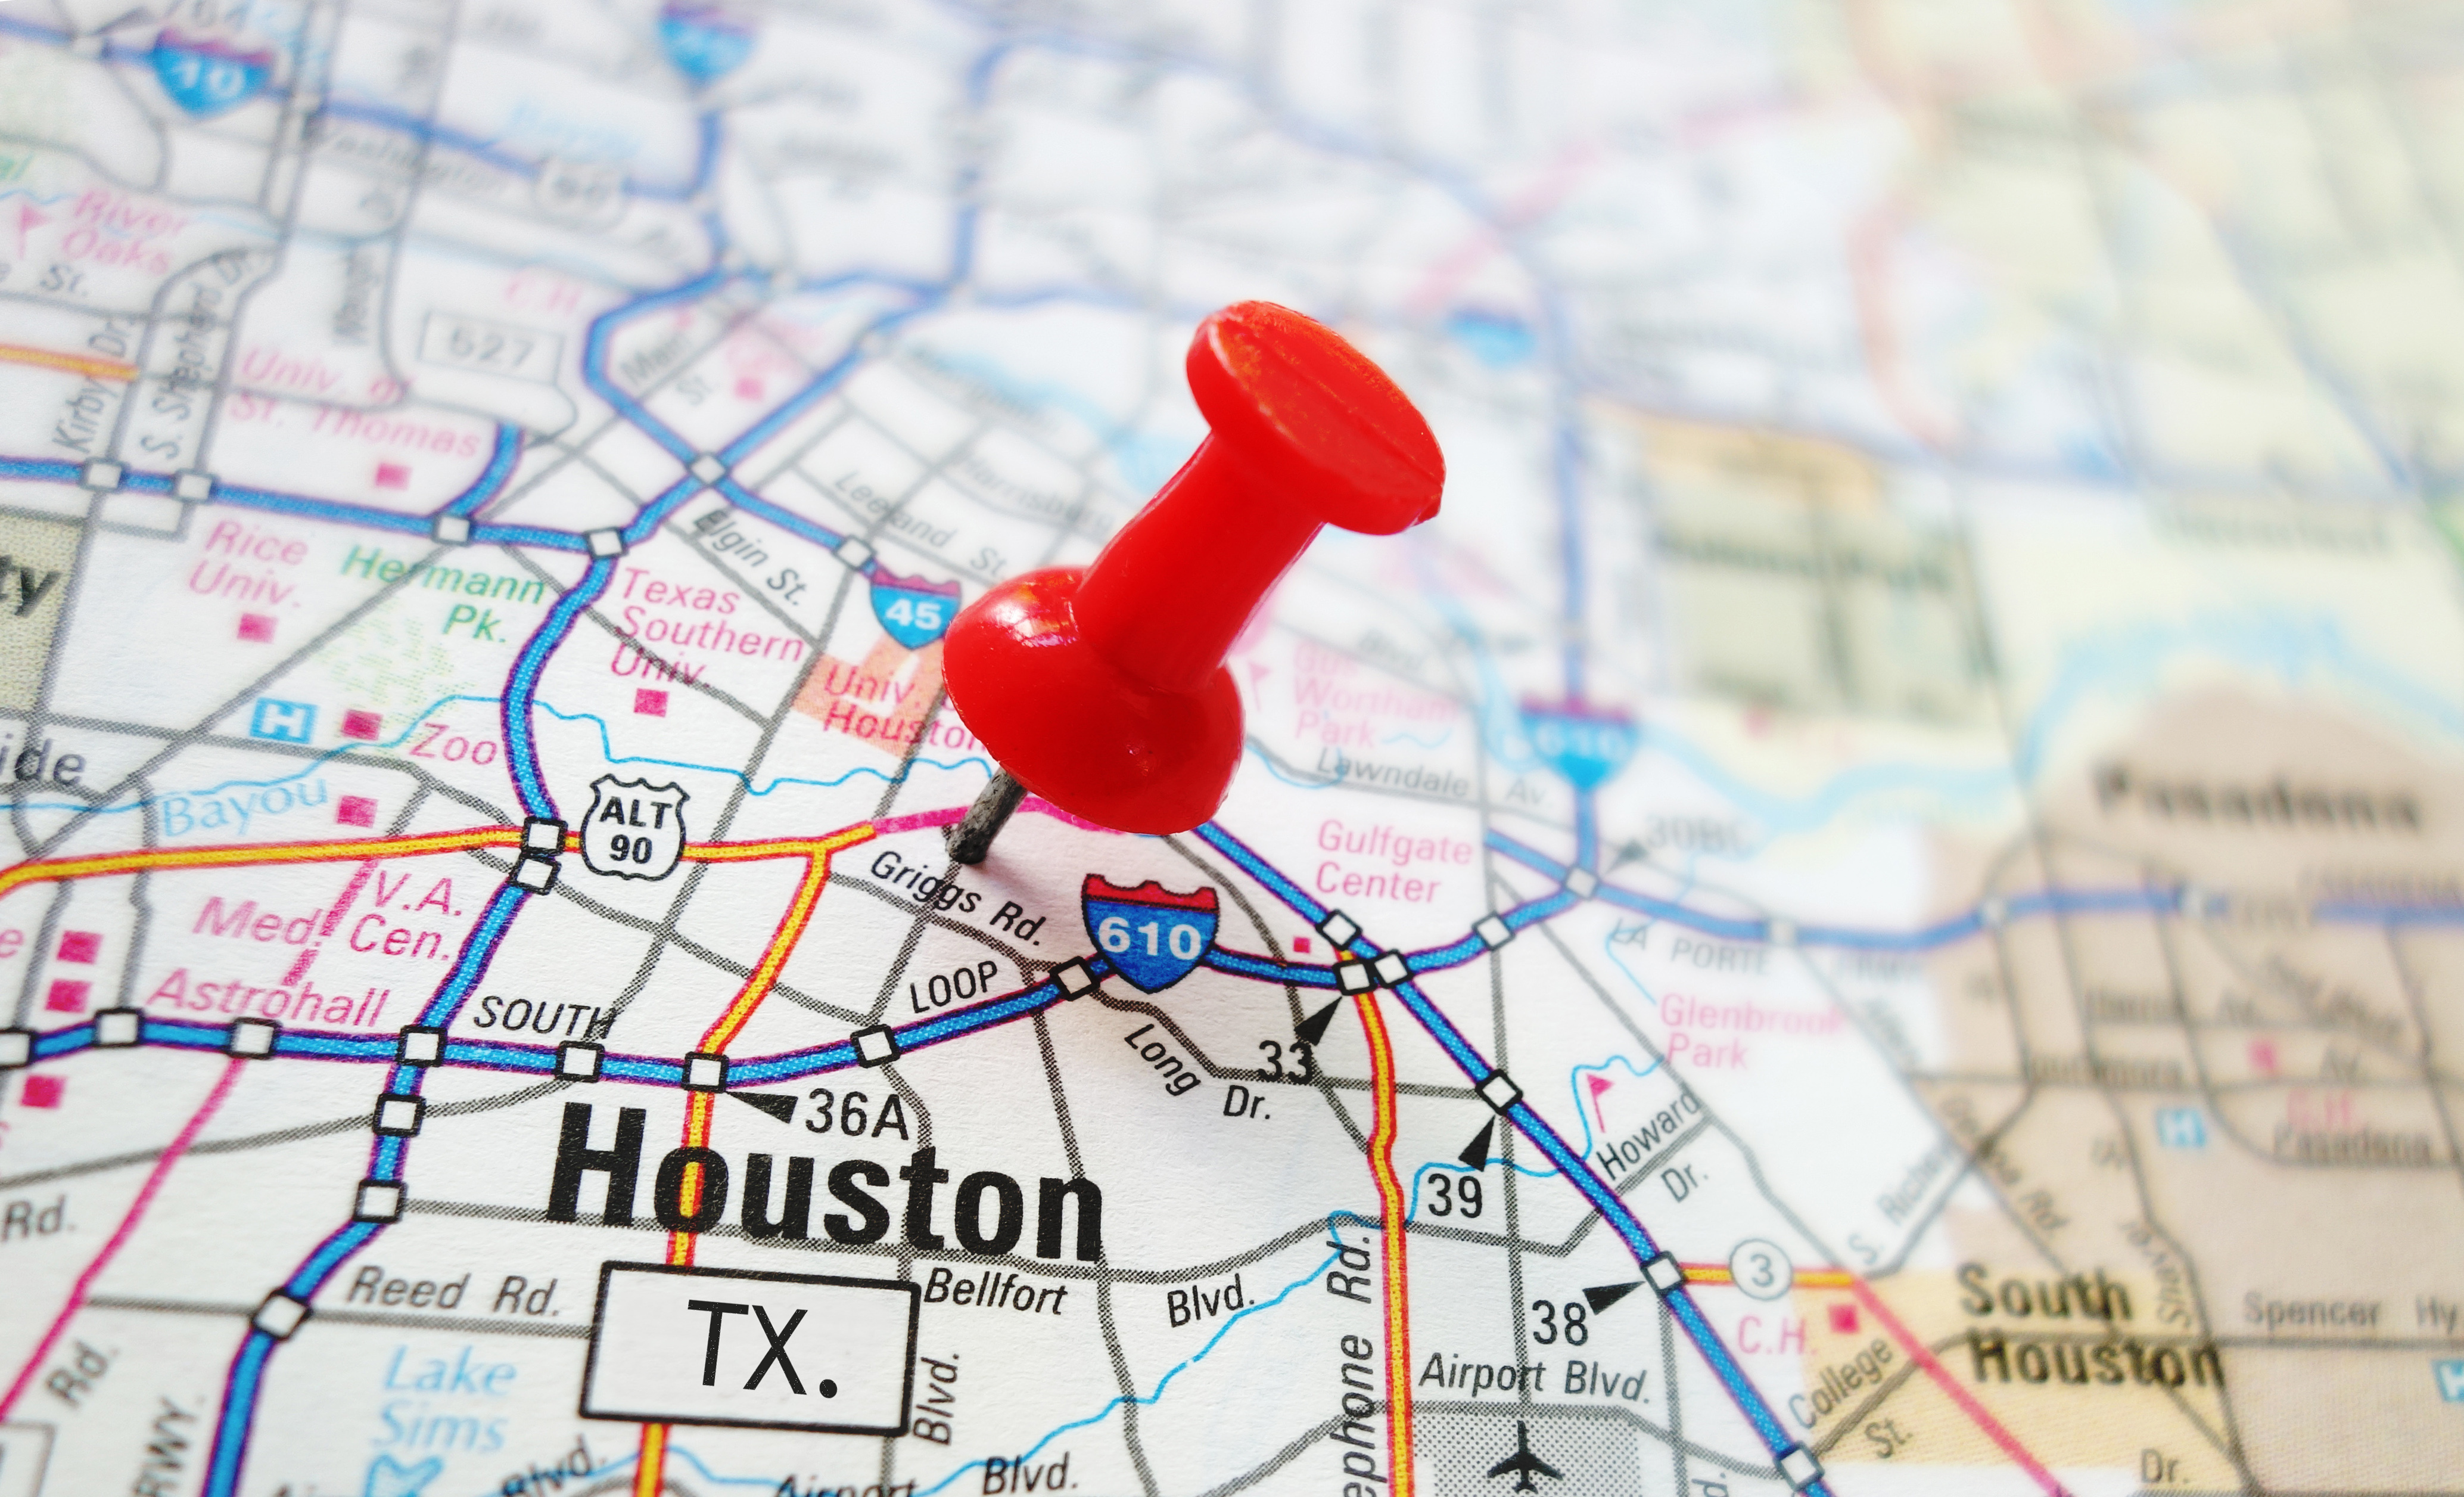 We Offer Sub-Zero Appliance Repair in all Houston METRO Areas